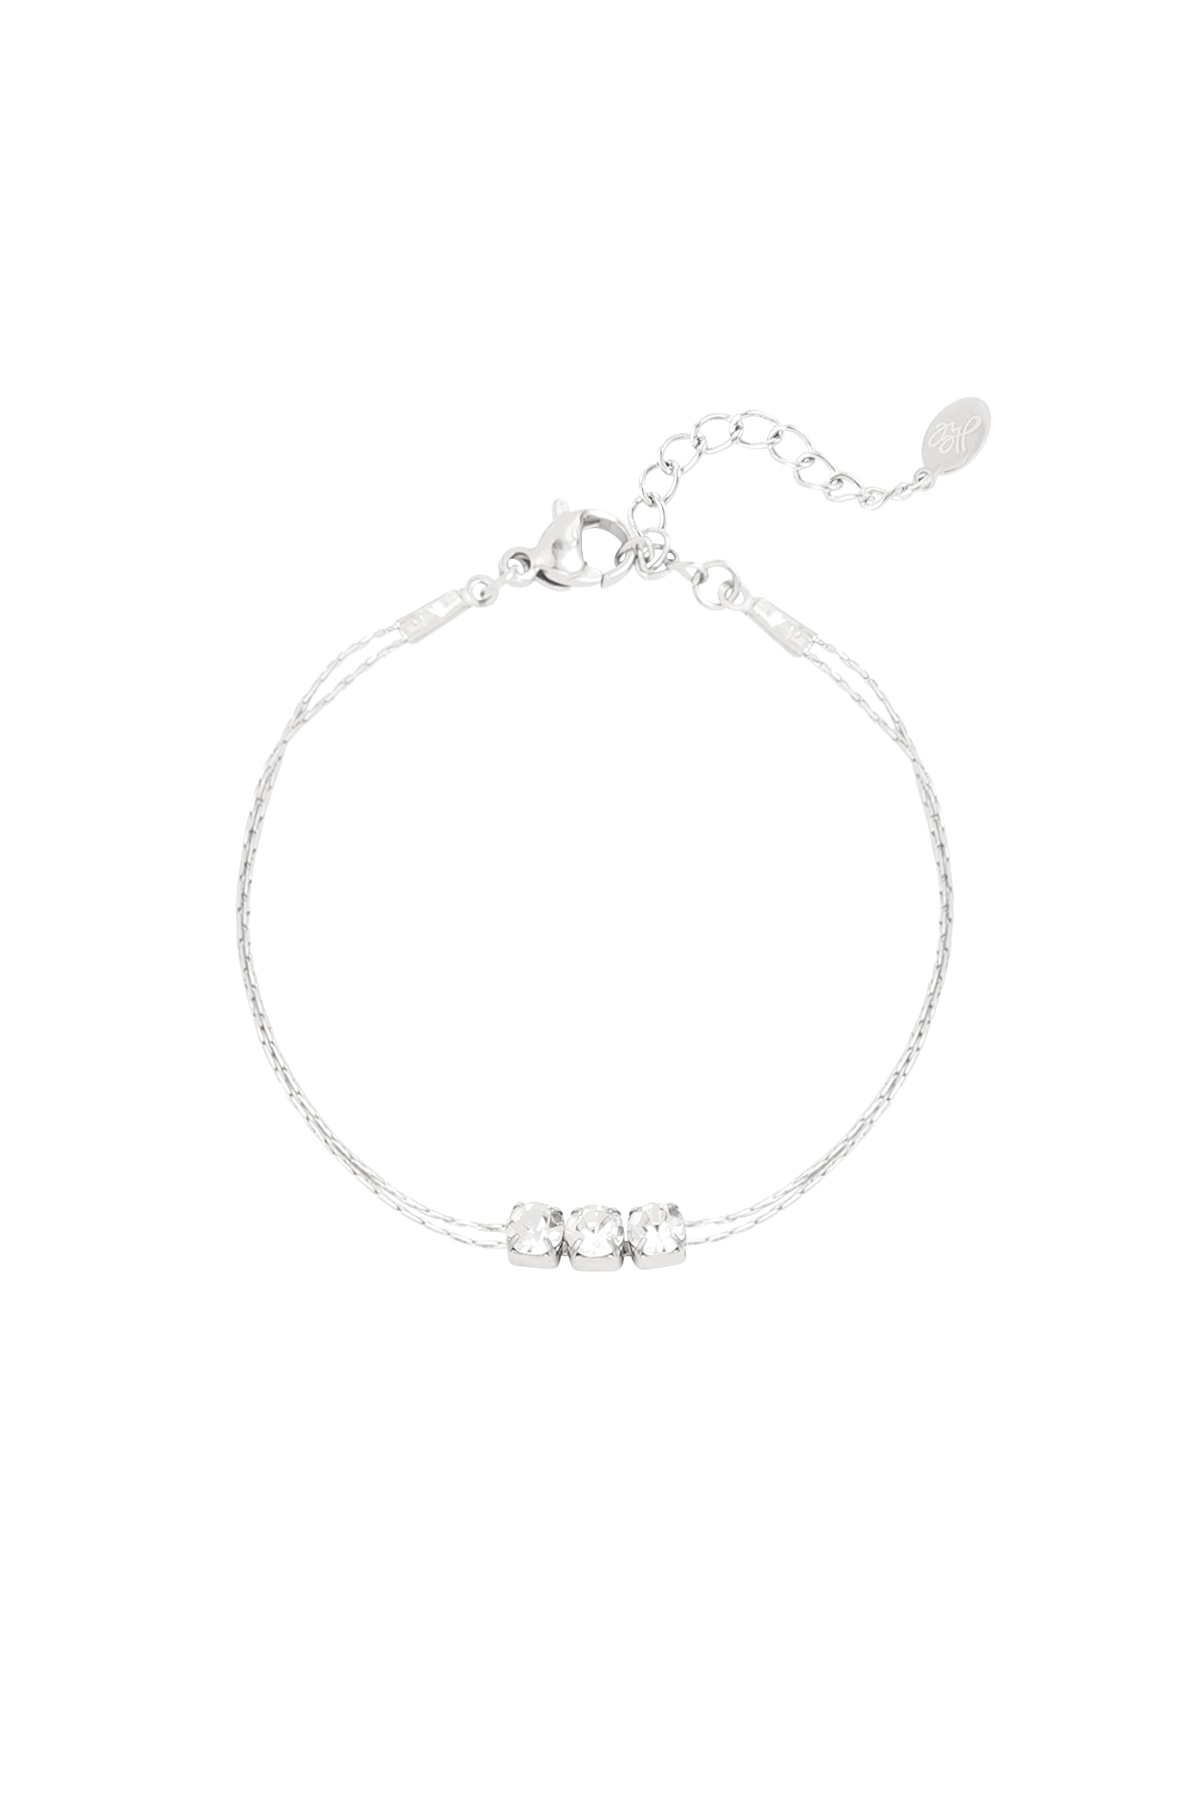 Bracelet silver with stone - white